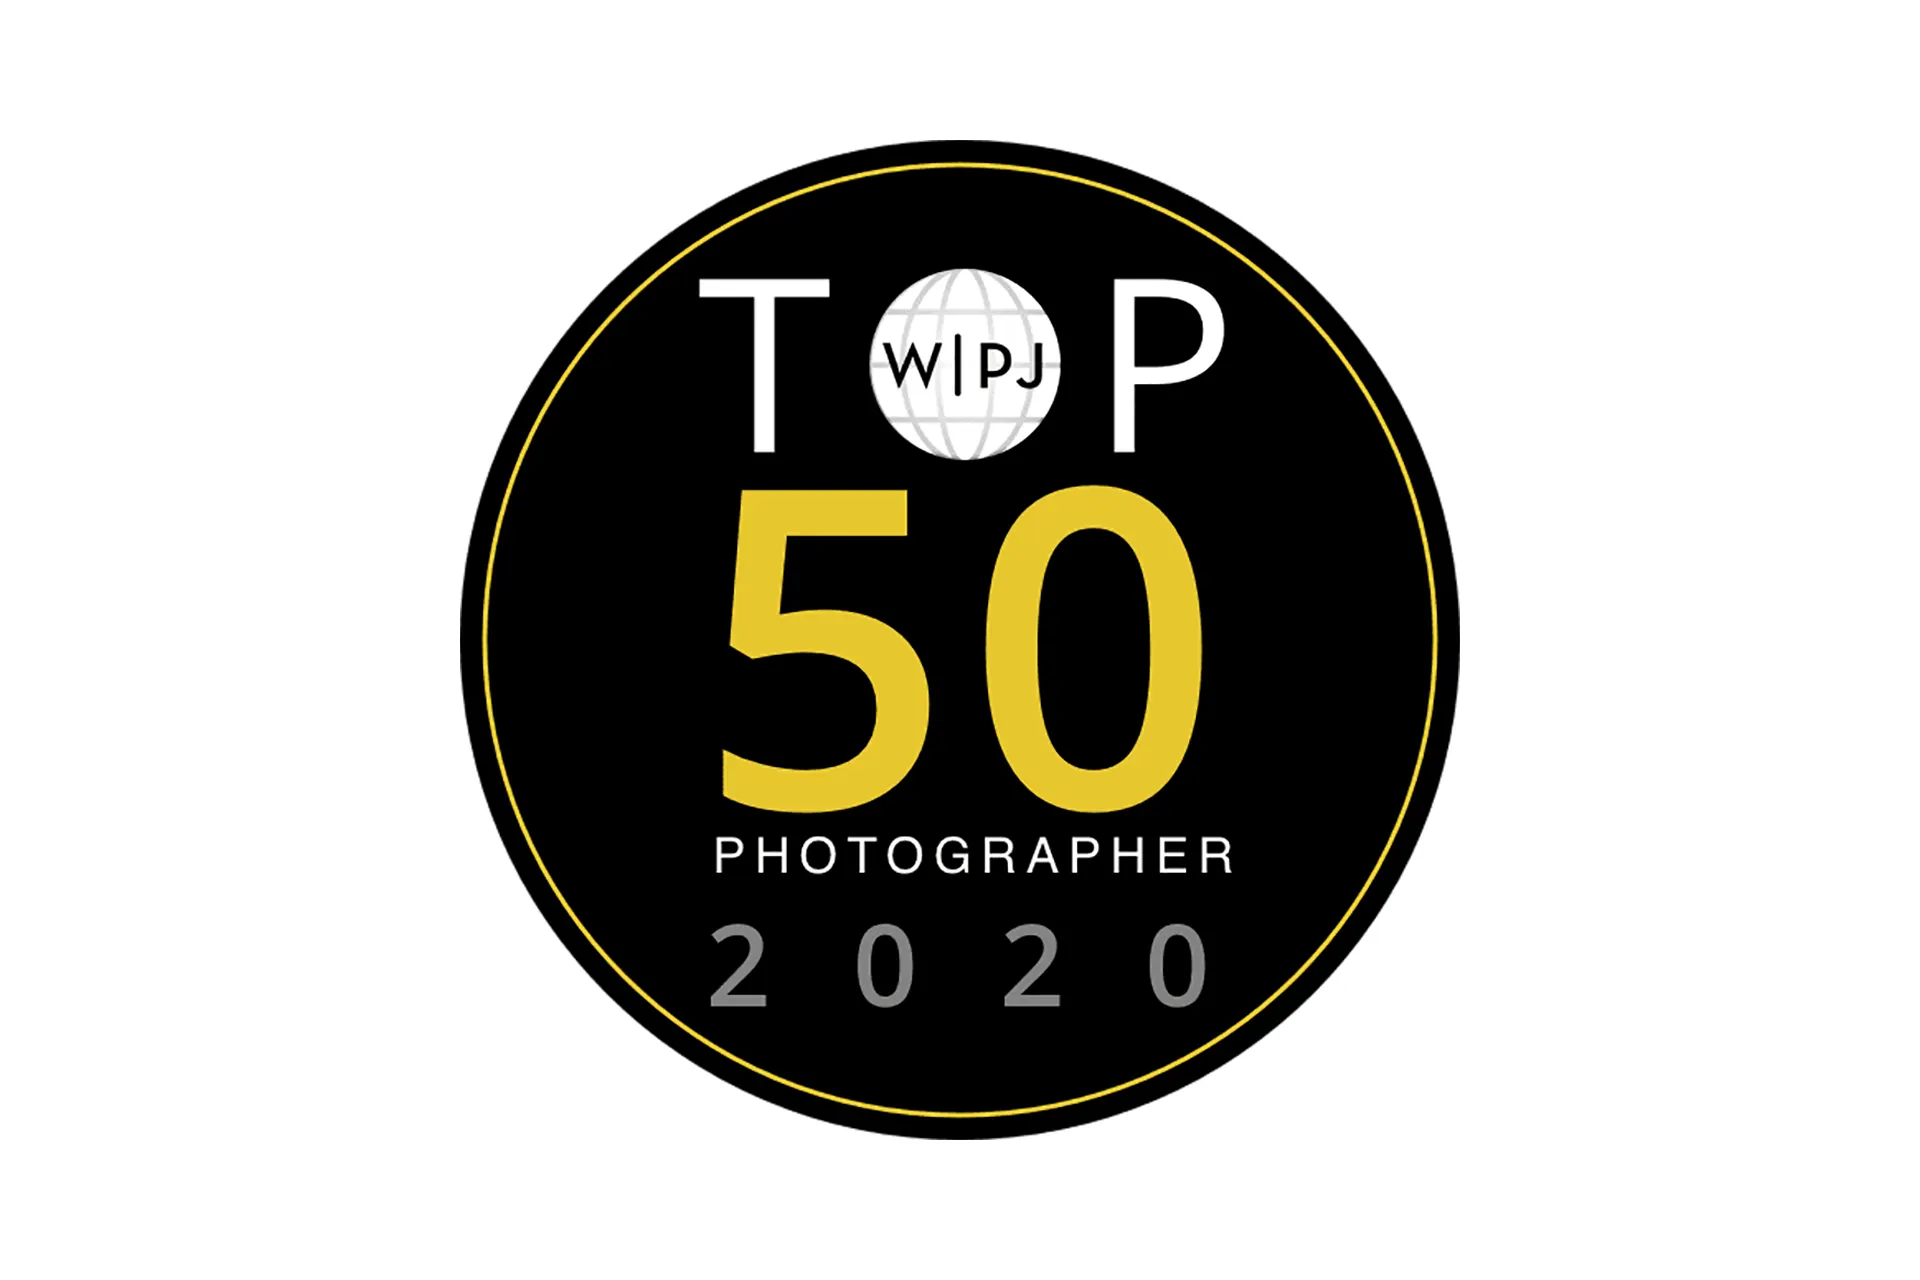 Top 50 photographer 2020